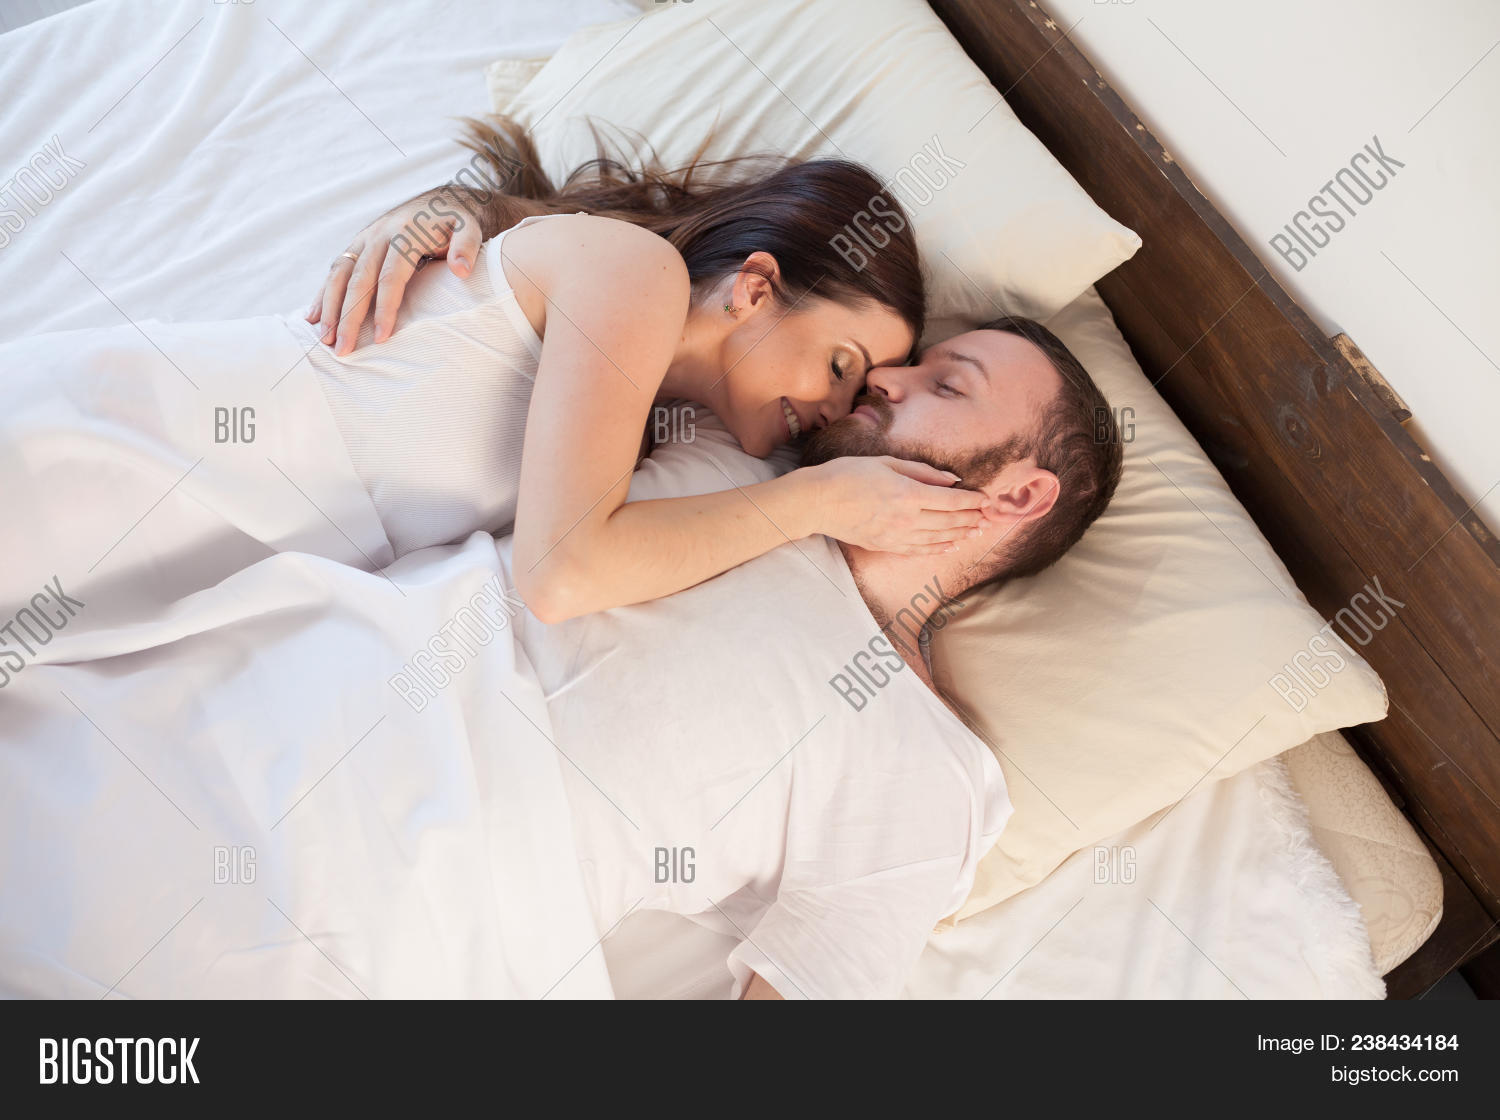 carolina magnani recommends sleeping wife photos pic